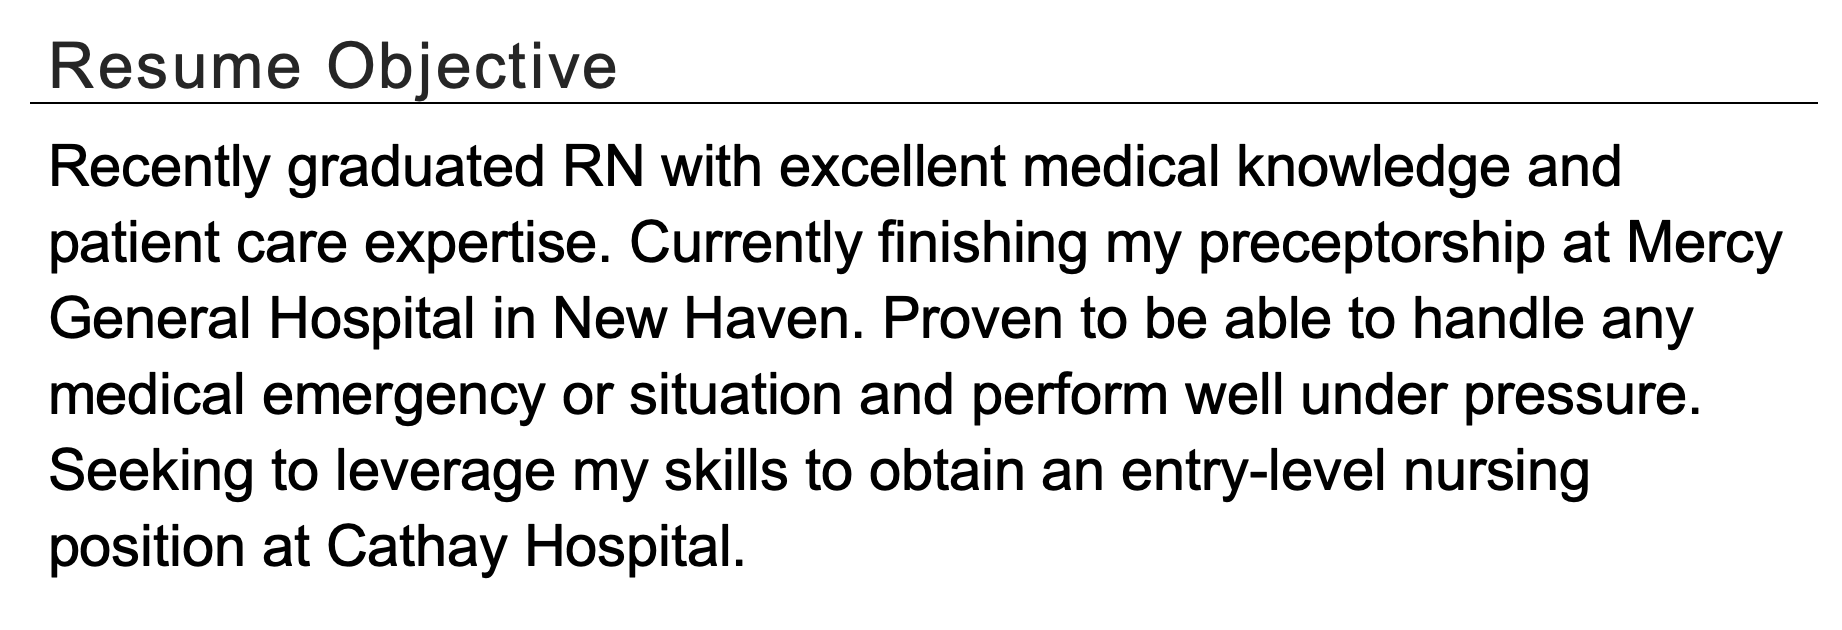 Entry-Level Nursing Career Objective